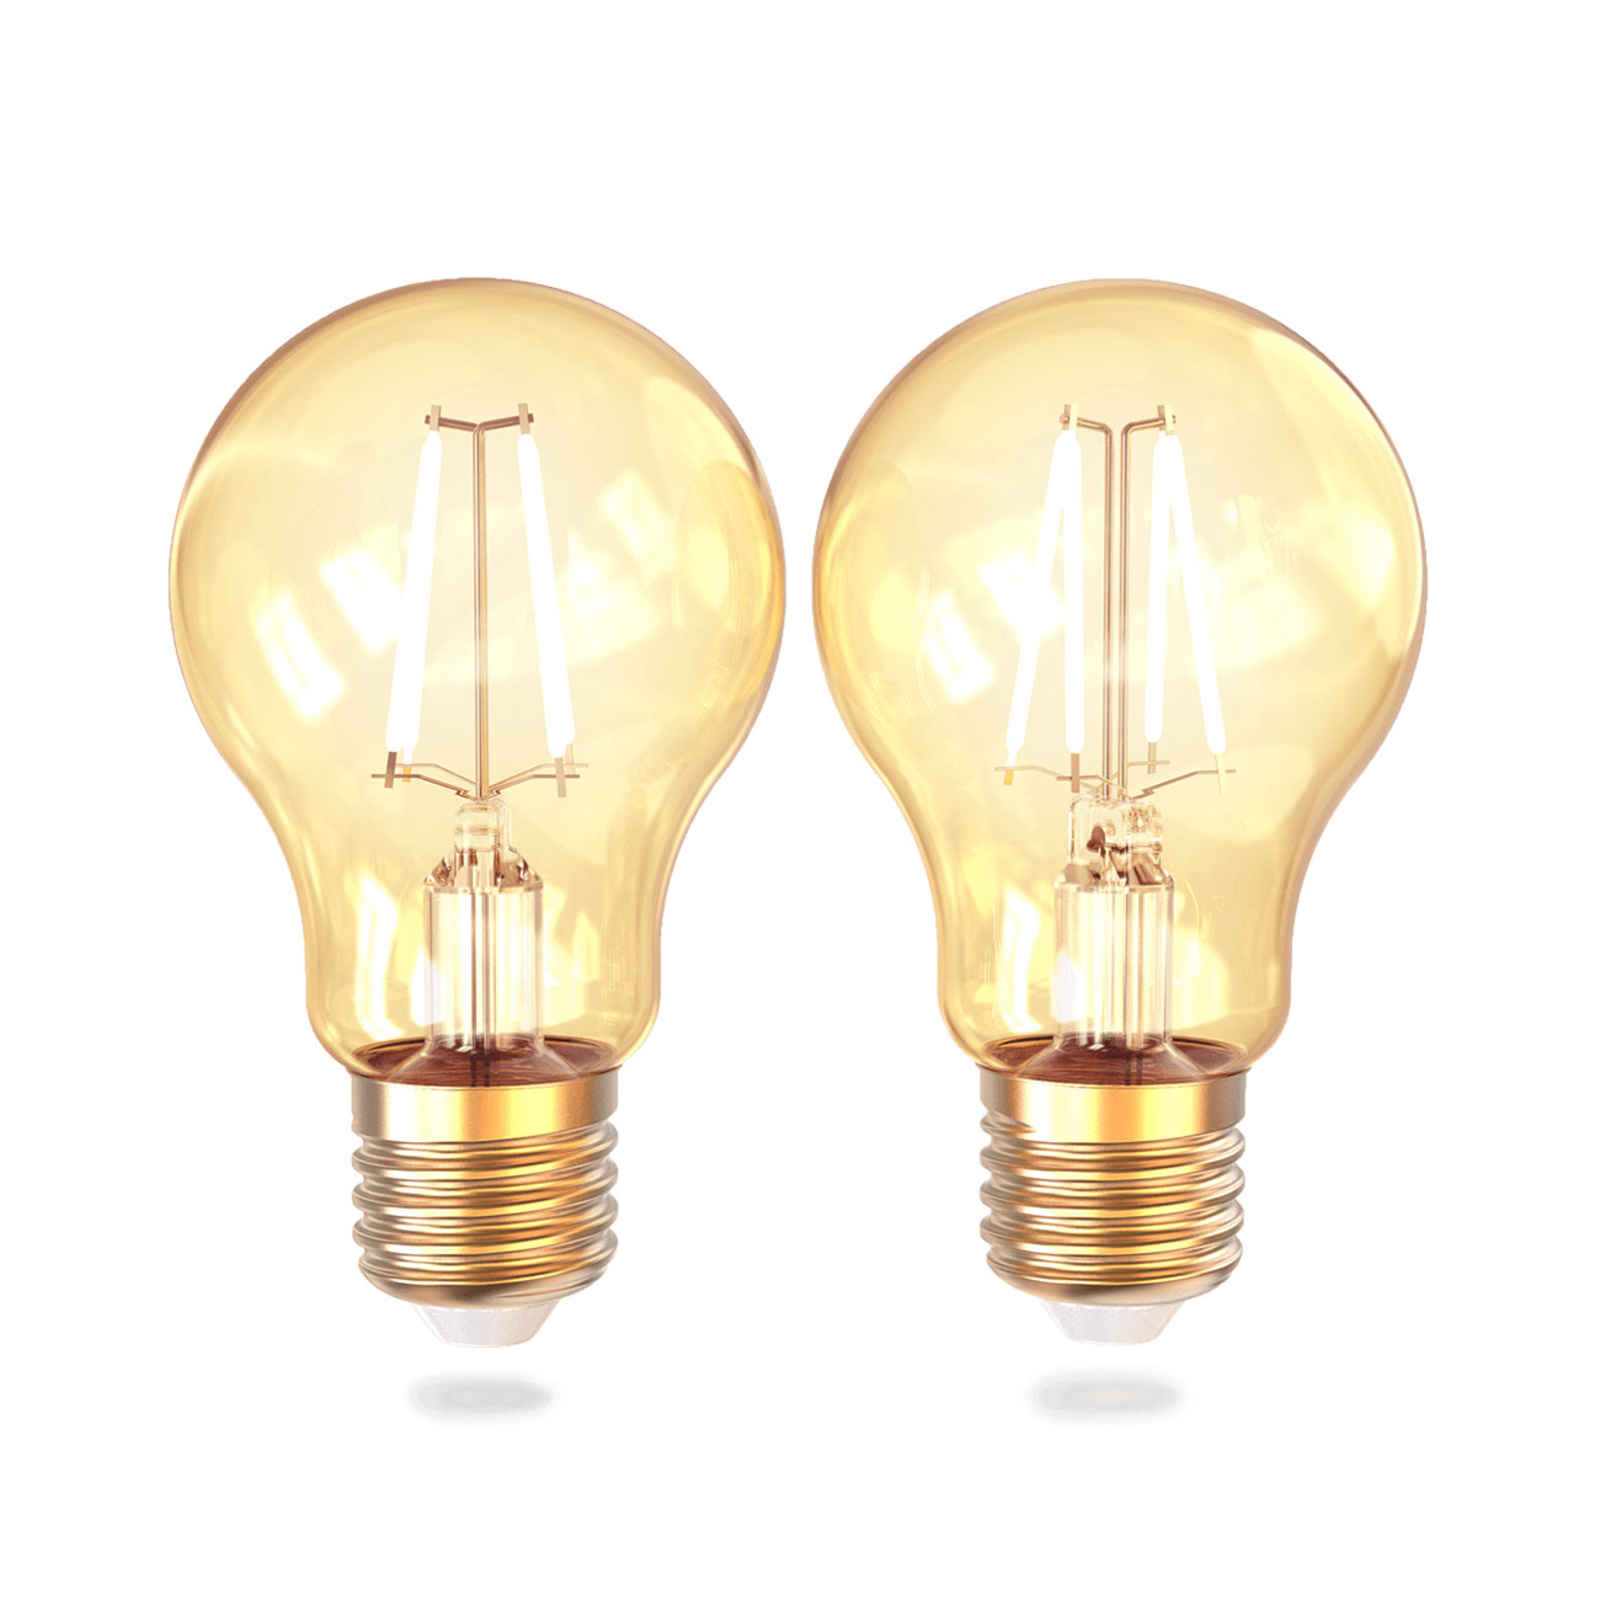 Innr LED lamp Bulb E27 822 350lm per 2 | Lampen24.nl